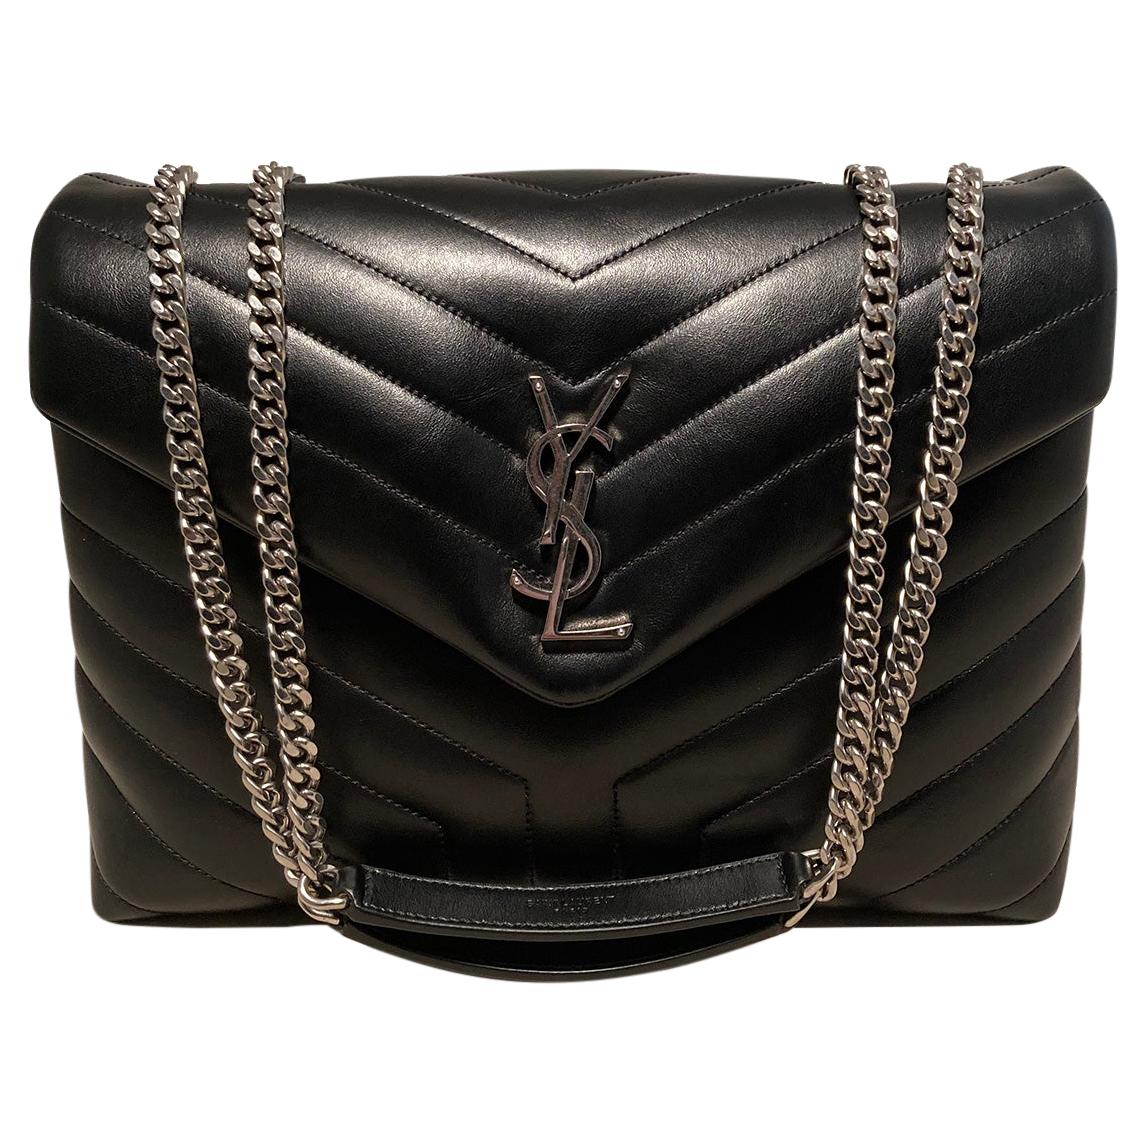 Ysl Handbags For Sale | semashow.com